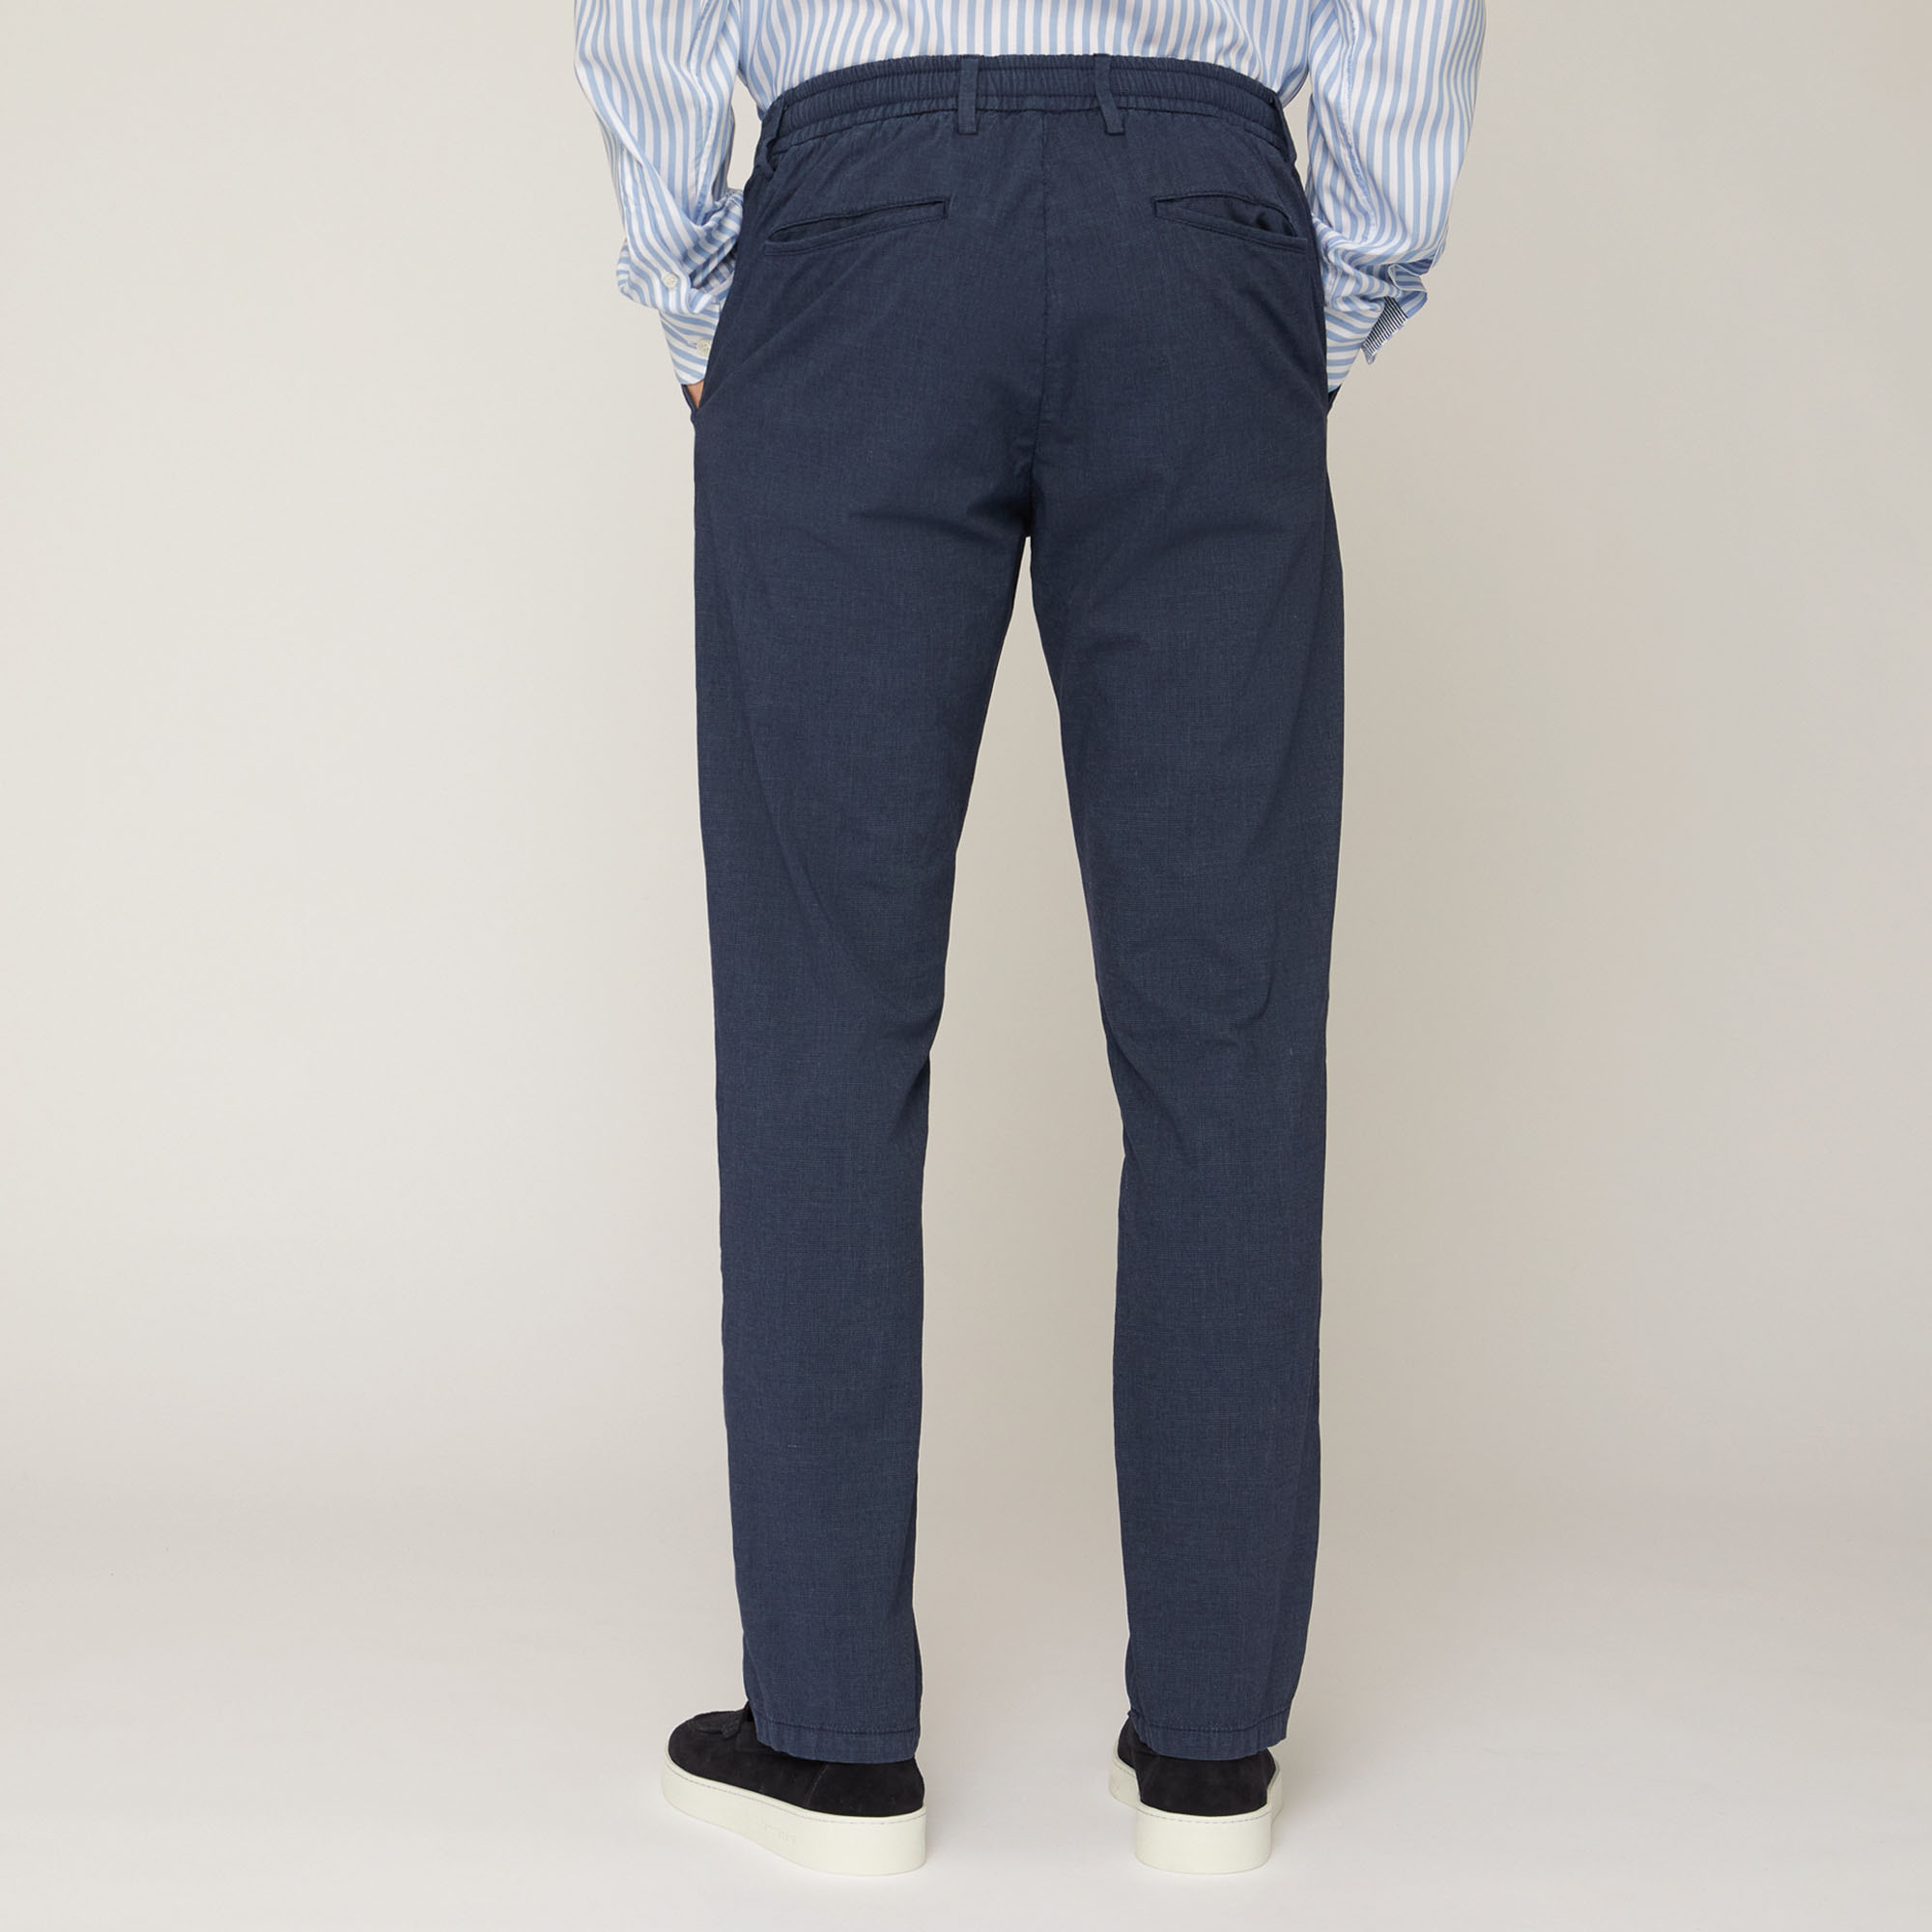 Pantaloni Jogger Misto Cotone, Blu Navy, large image number 1